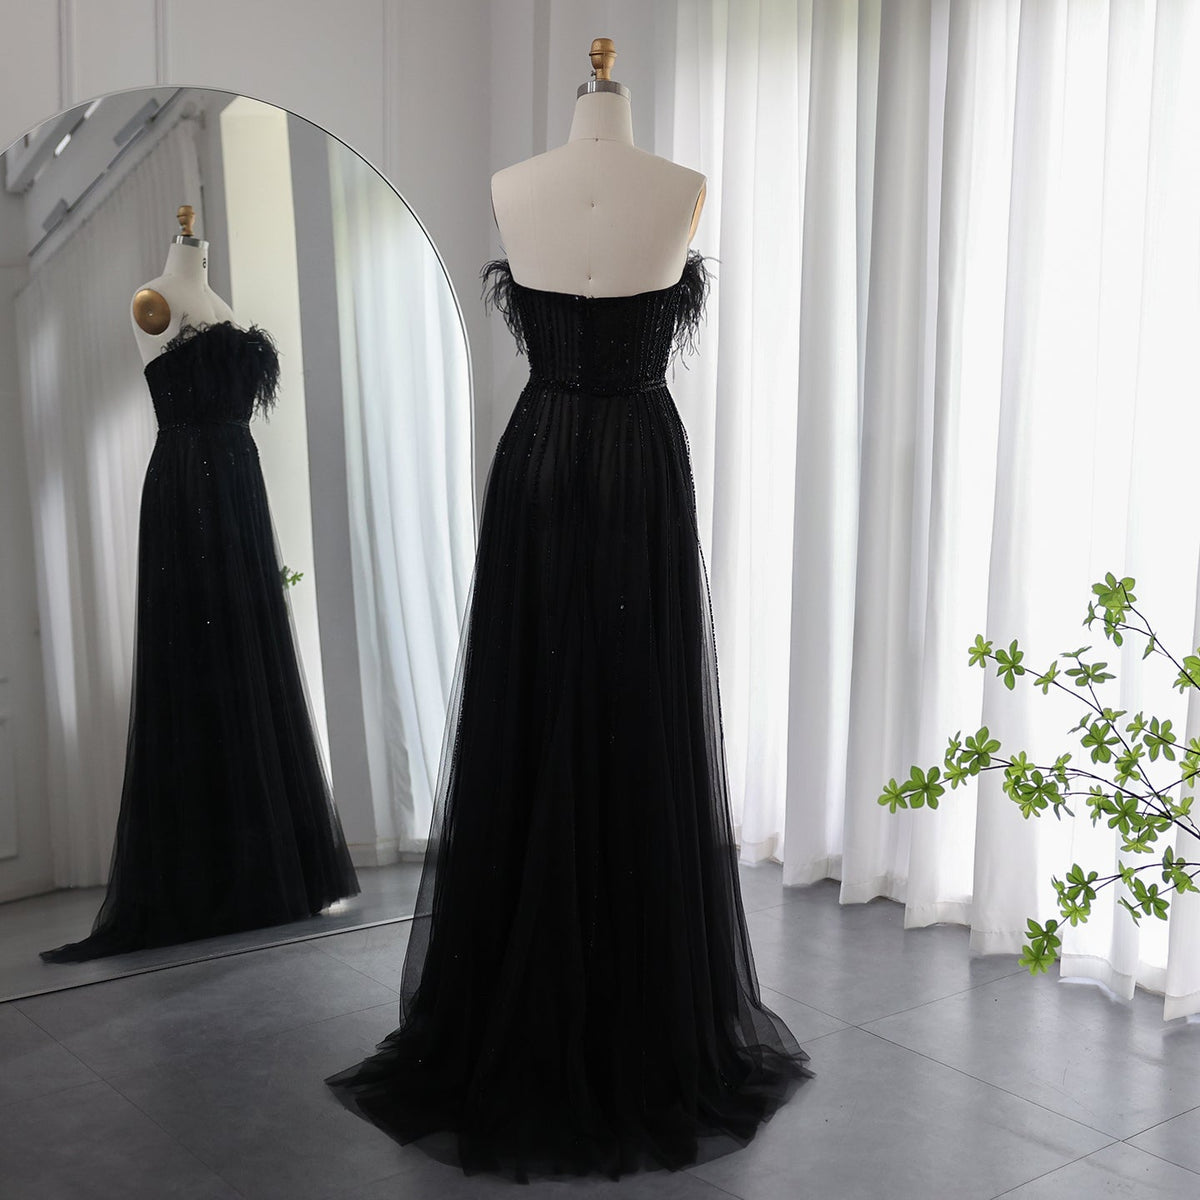 Dreamy Vow Luxury Dubai Black Feathers Evening Dresses for Women Wedding Party Elegant Long Pink Arabic Formal Prom Dress 401